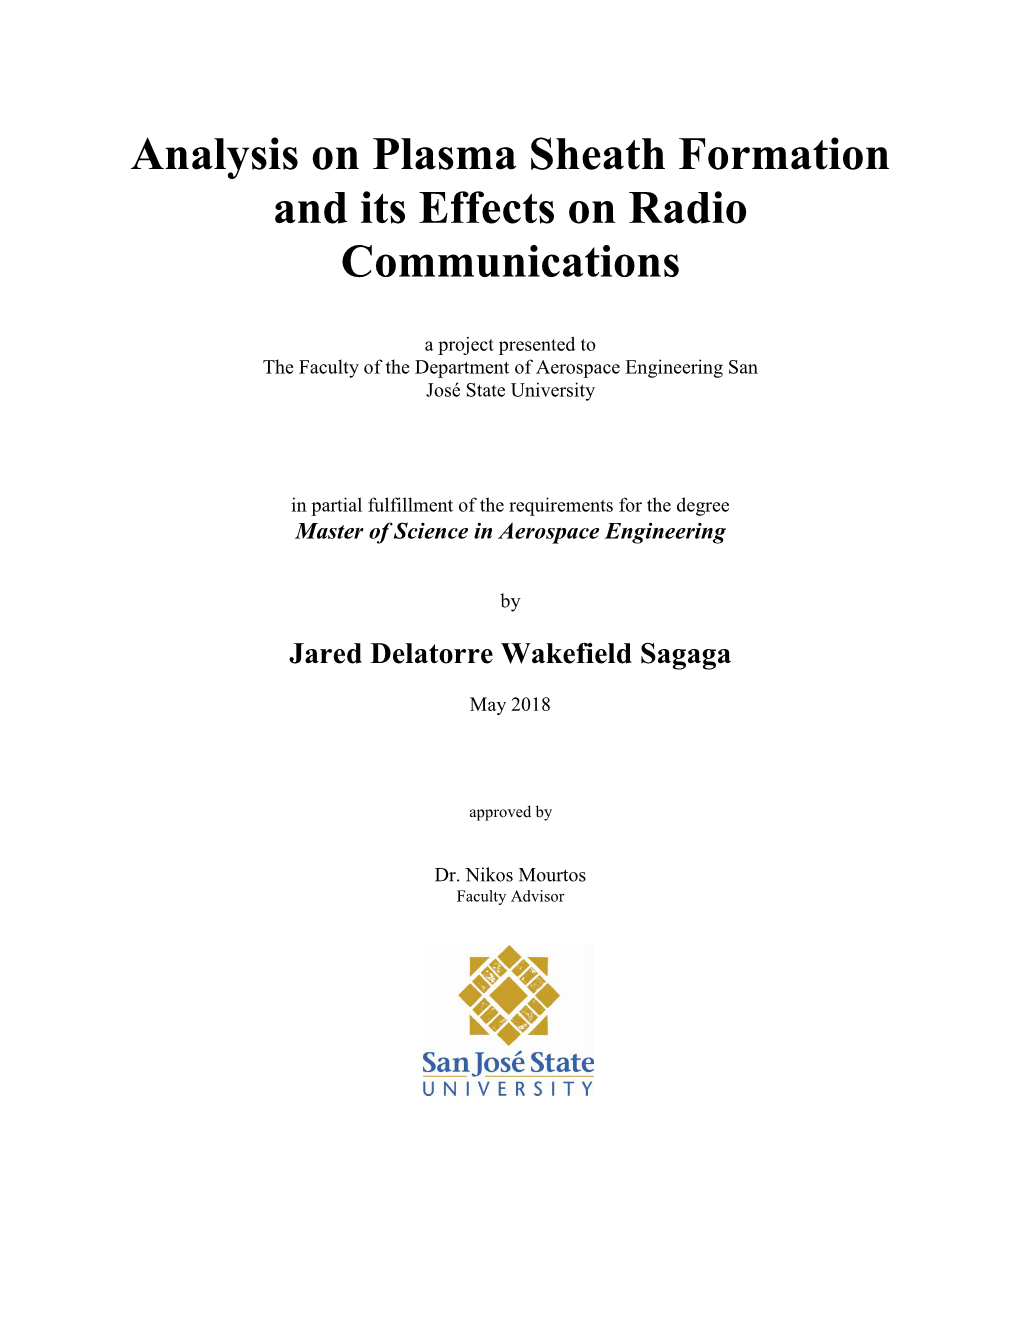 Analysis on Plasma Sheath Formation and Its Effects on Radio Communications